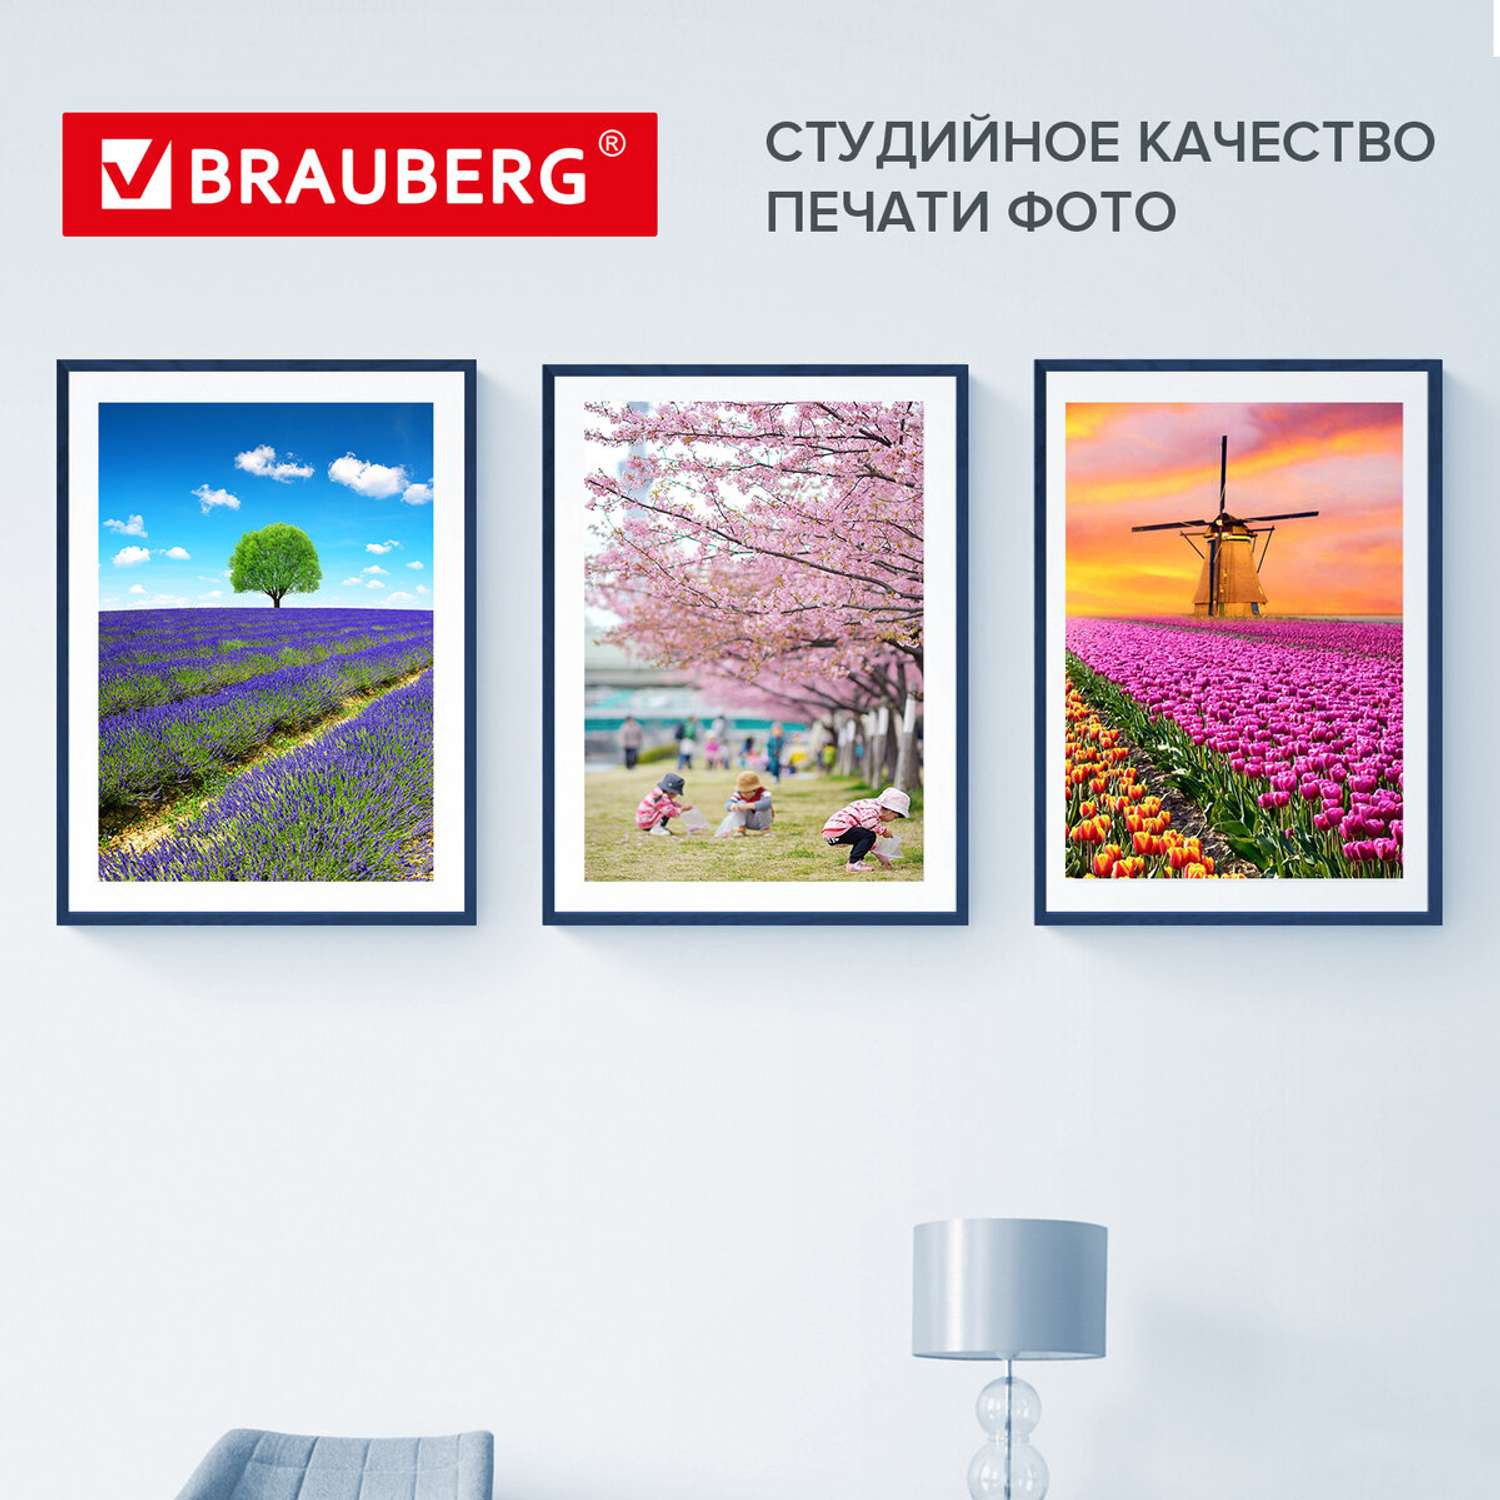 Фотобумага Brauberg супер-глянцевая для печати фото на струйных принтерах - фото 5